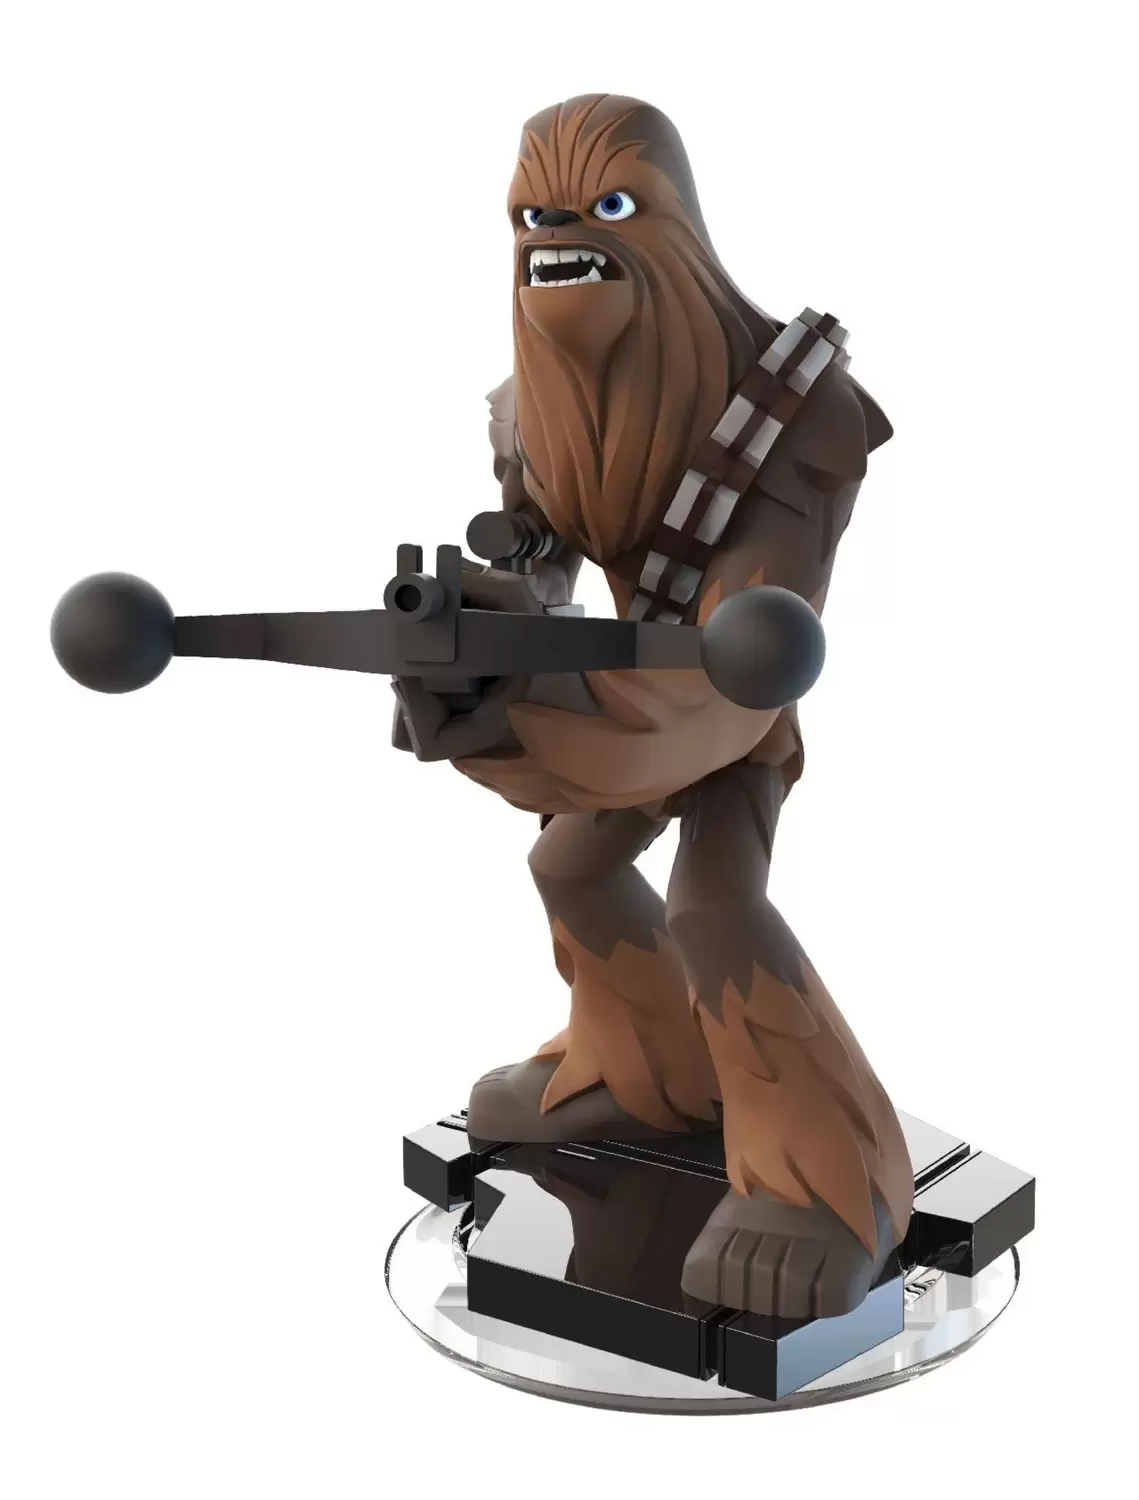 Disney Infinity Action figures - Chewbacca